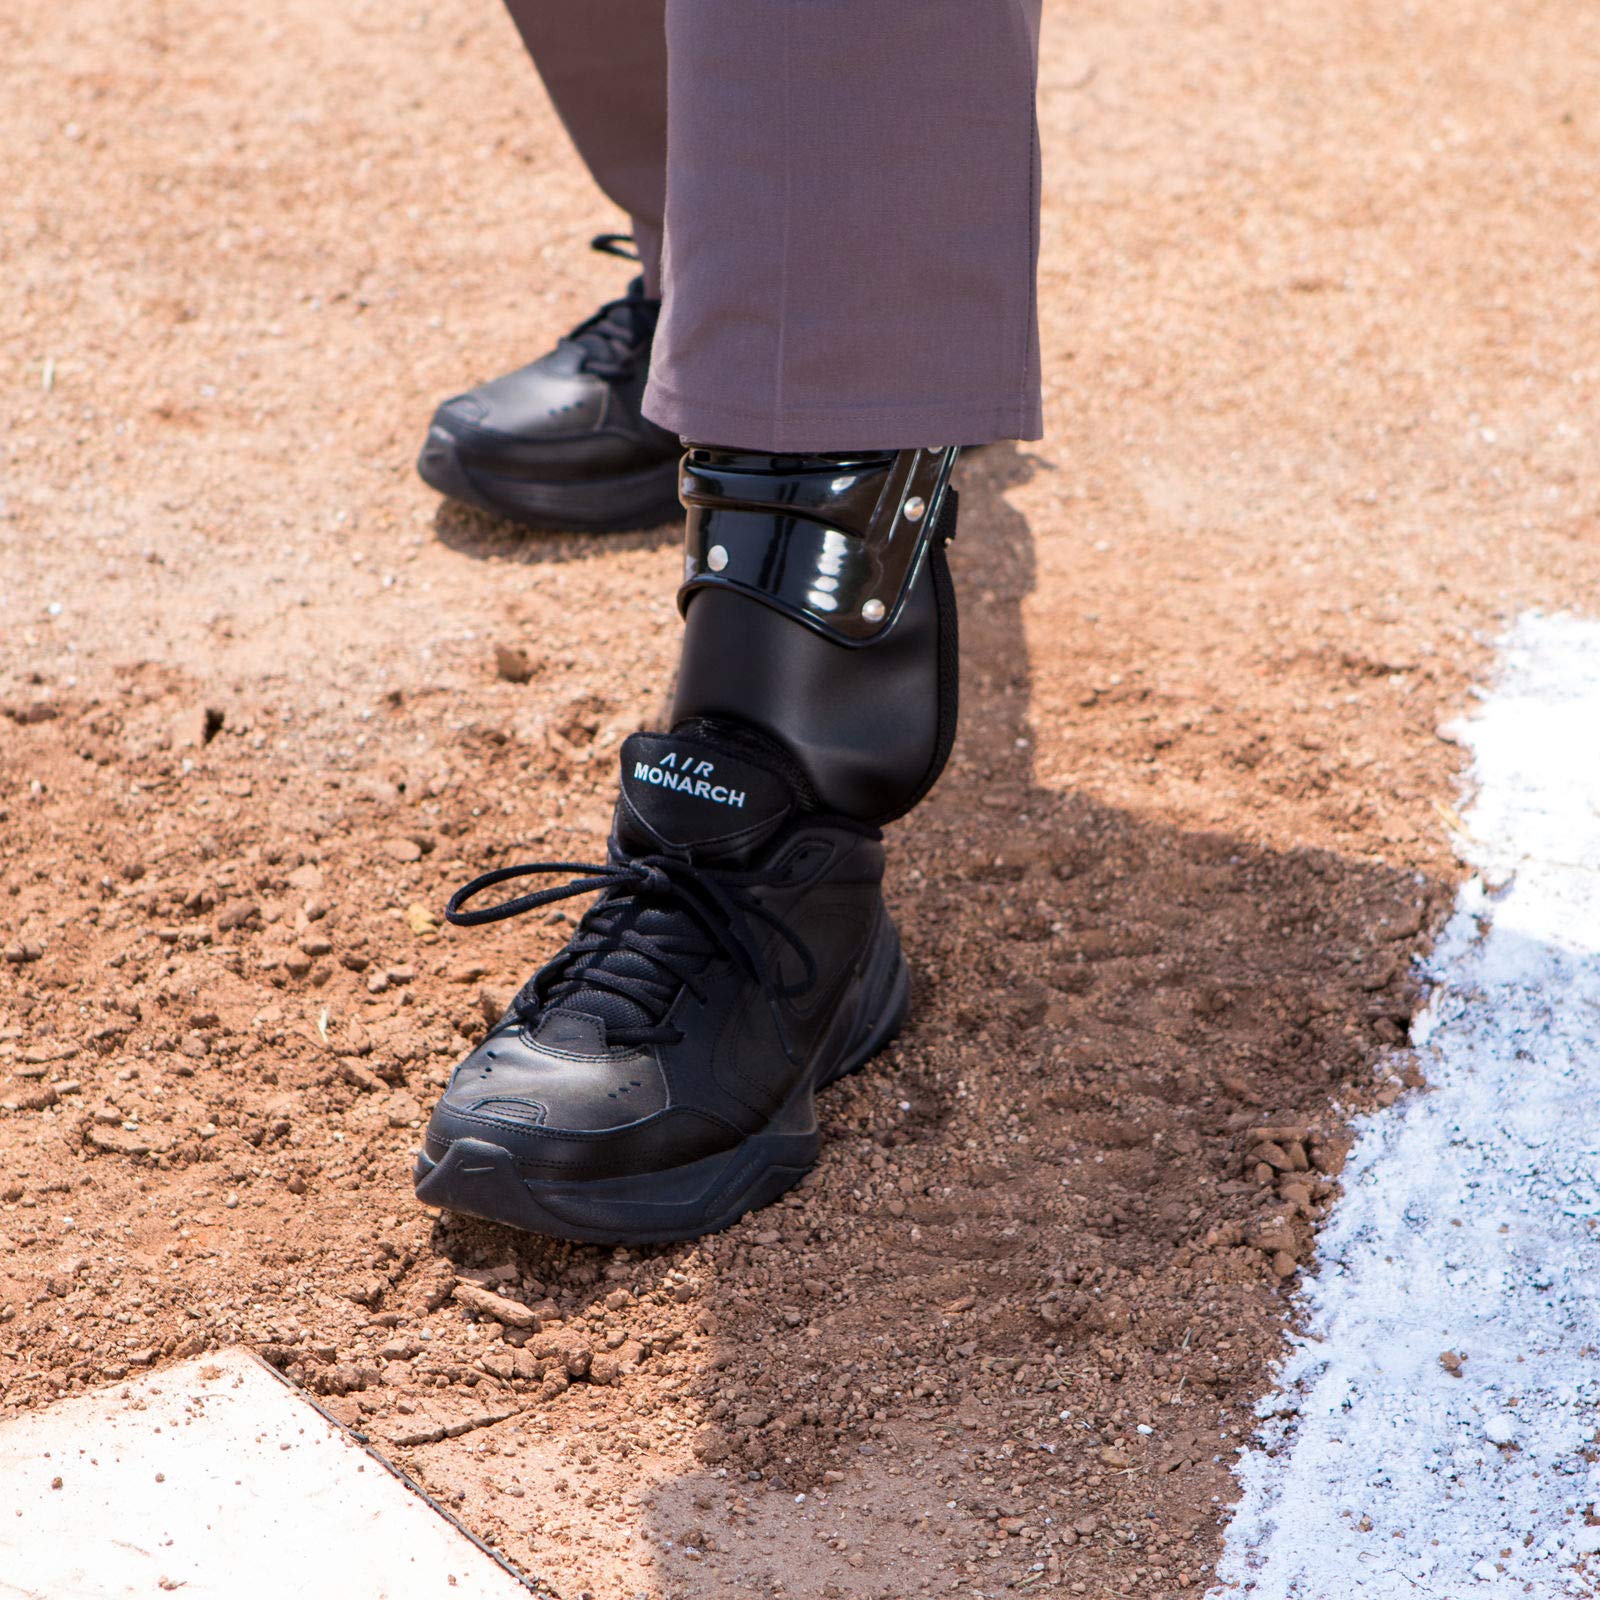 Champion Sports Umpire Leg Guards: Single Knee Umpire’s Shin Guard for Baseball & Softball - Pair of 16.5